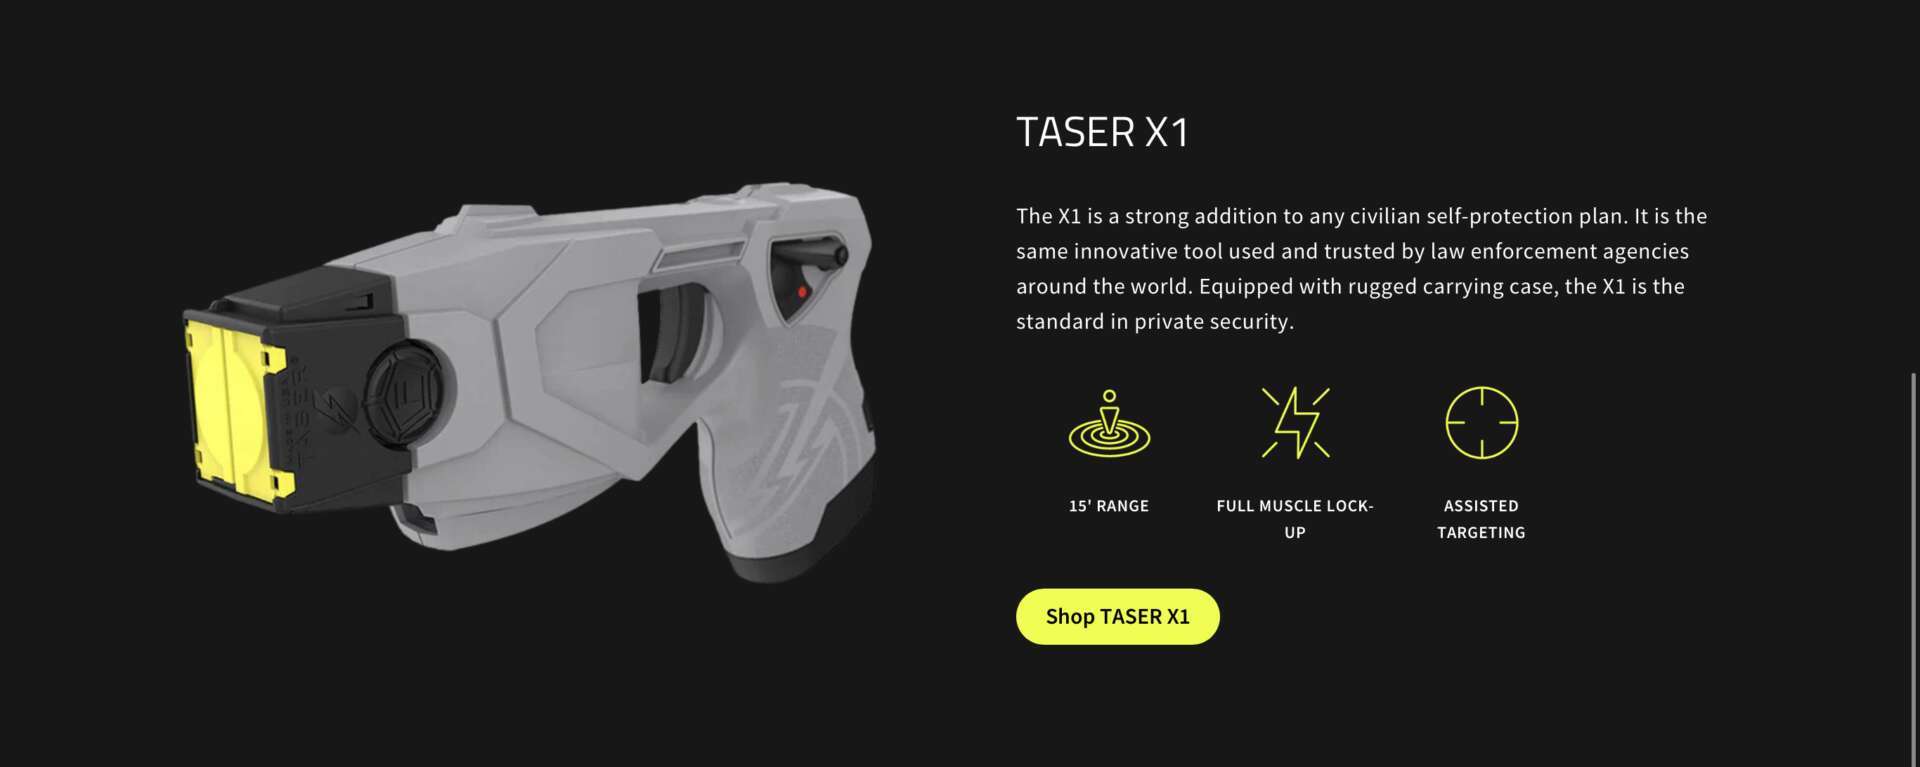 TASER X1 Professional Series